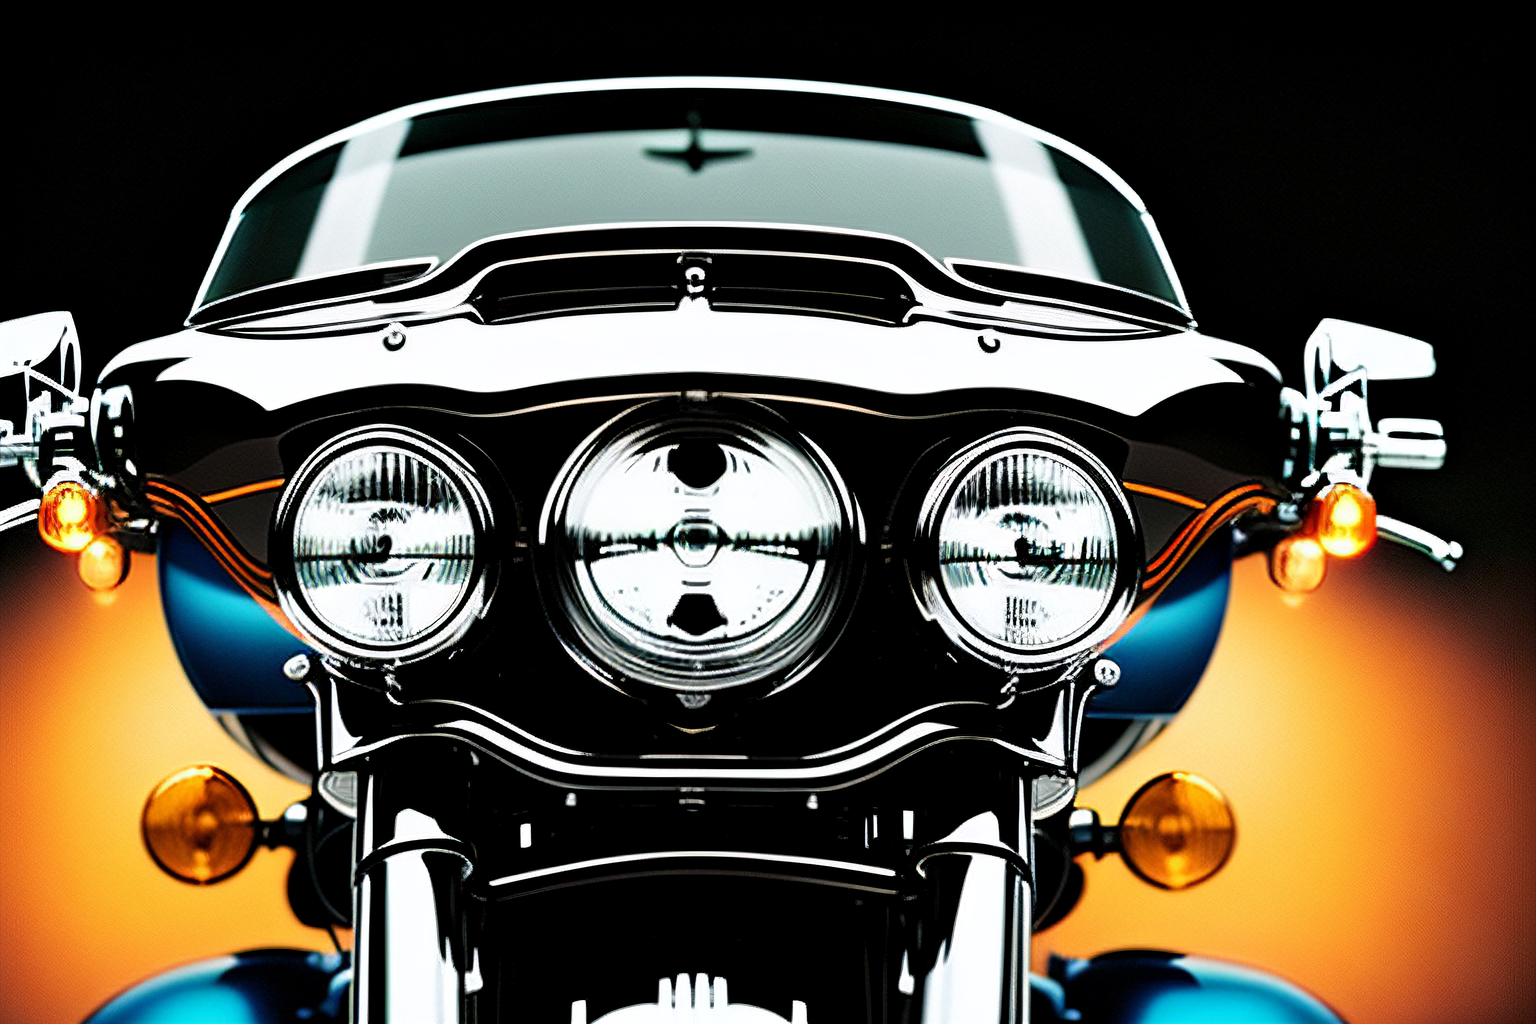 Harley Davidson Headlight Problems: Solutions